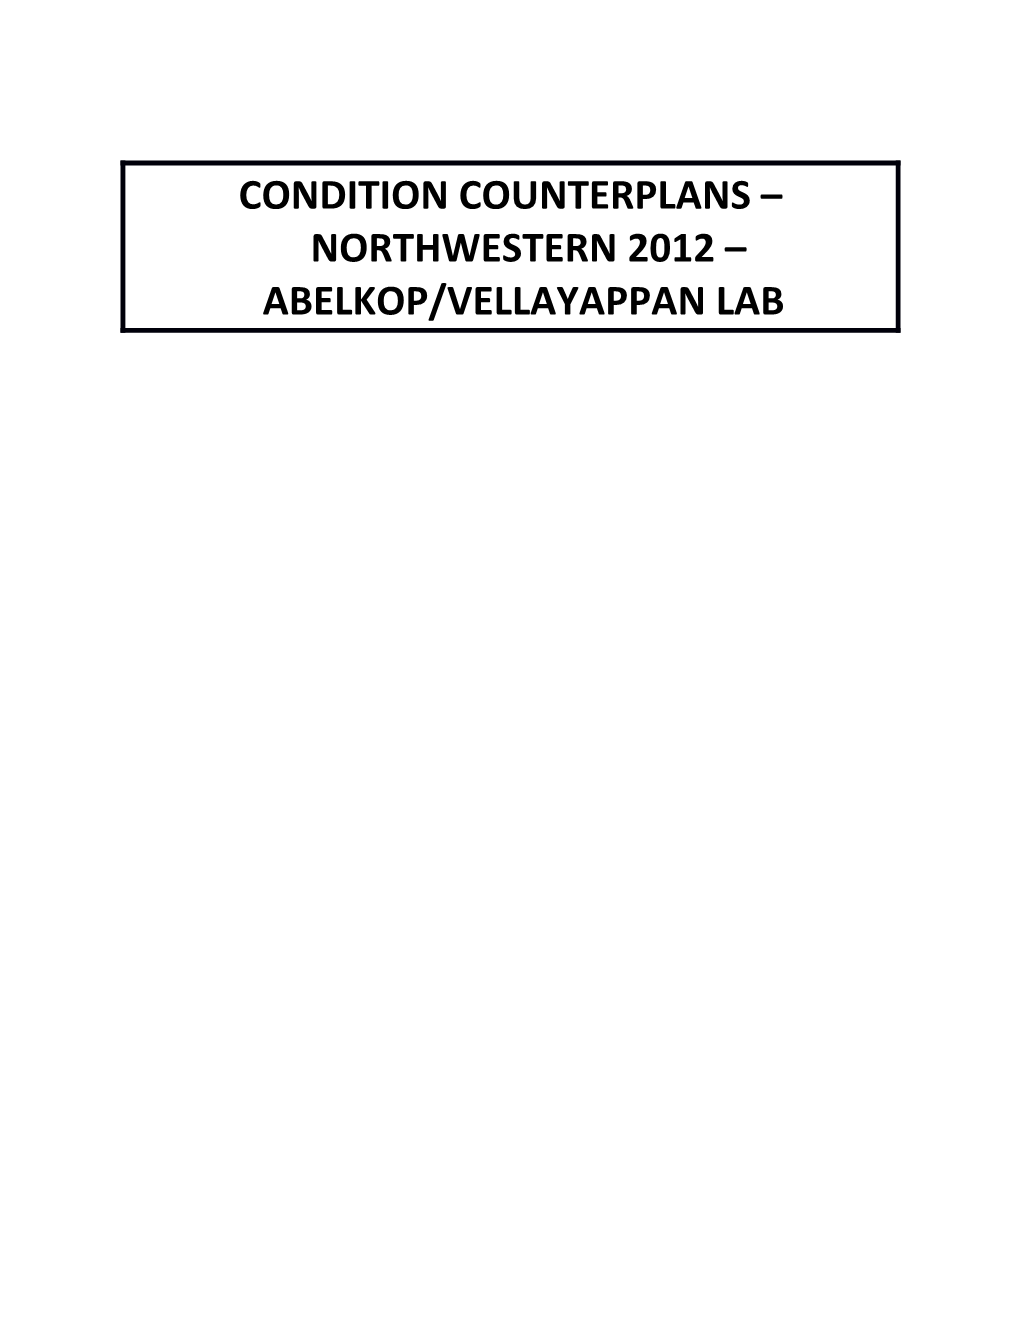 Condition Counterplans Northwestern 2012 Abelkop/Vellayappan Lab